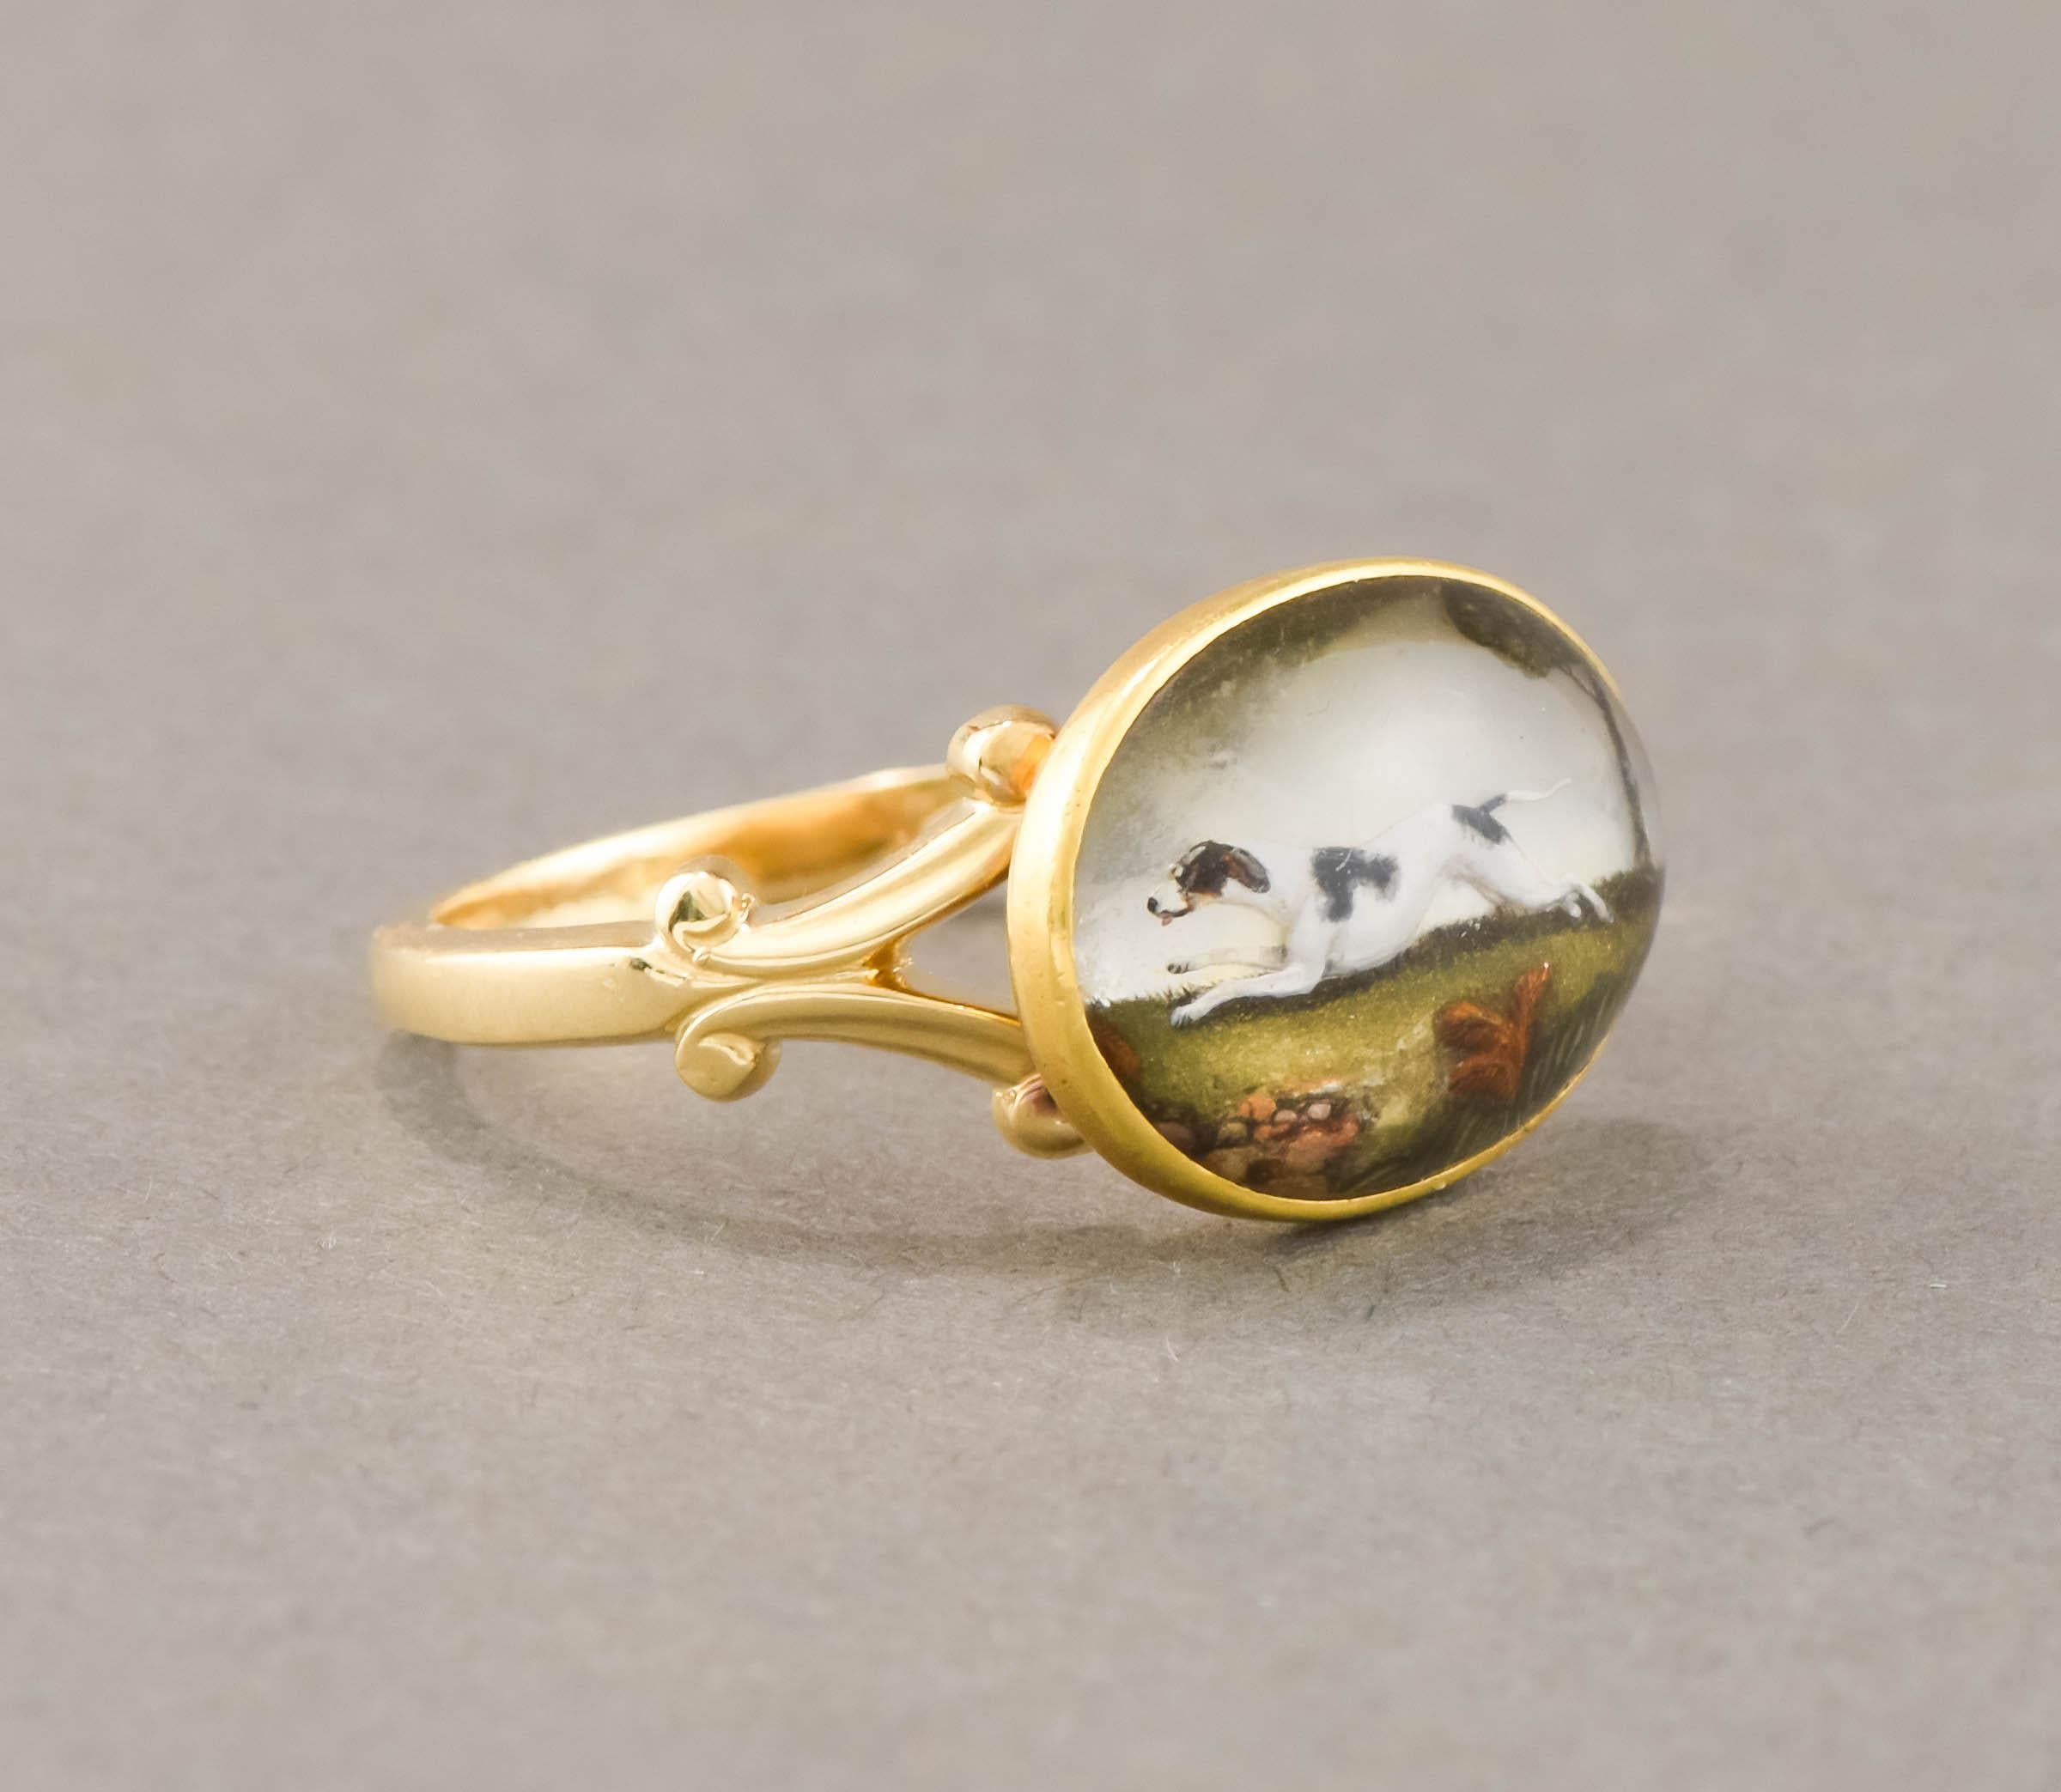 Essex Crystal Running Dog Hound Ring in 18K & 14K Gold - Antique Conversion #2 2